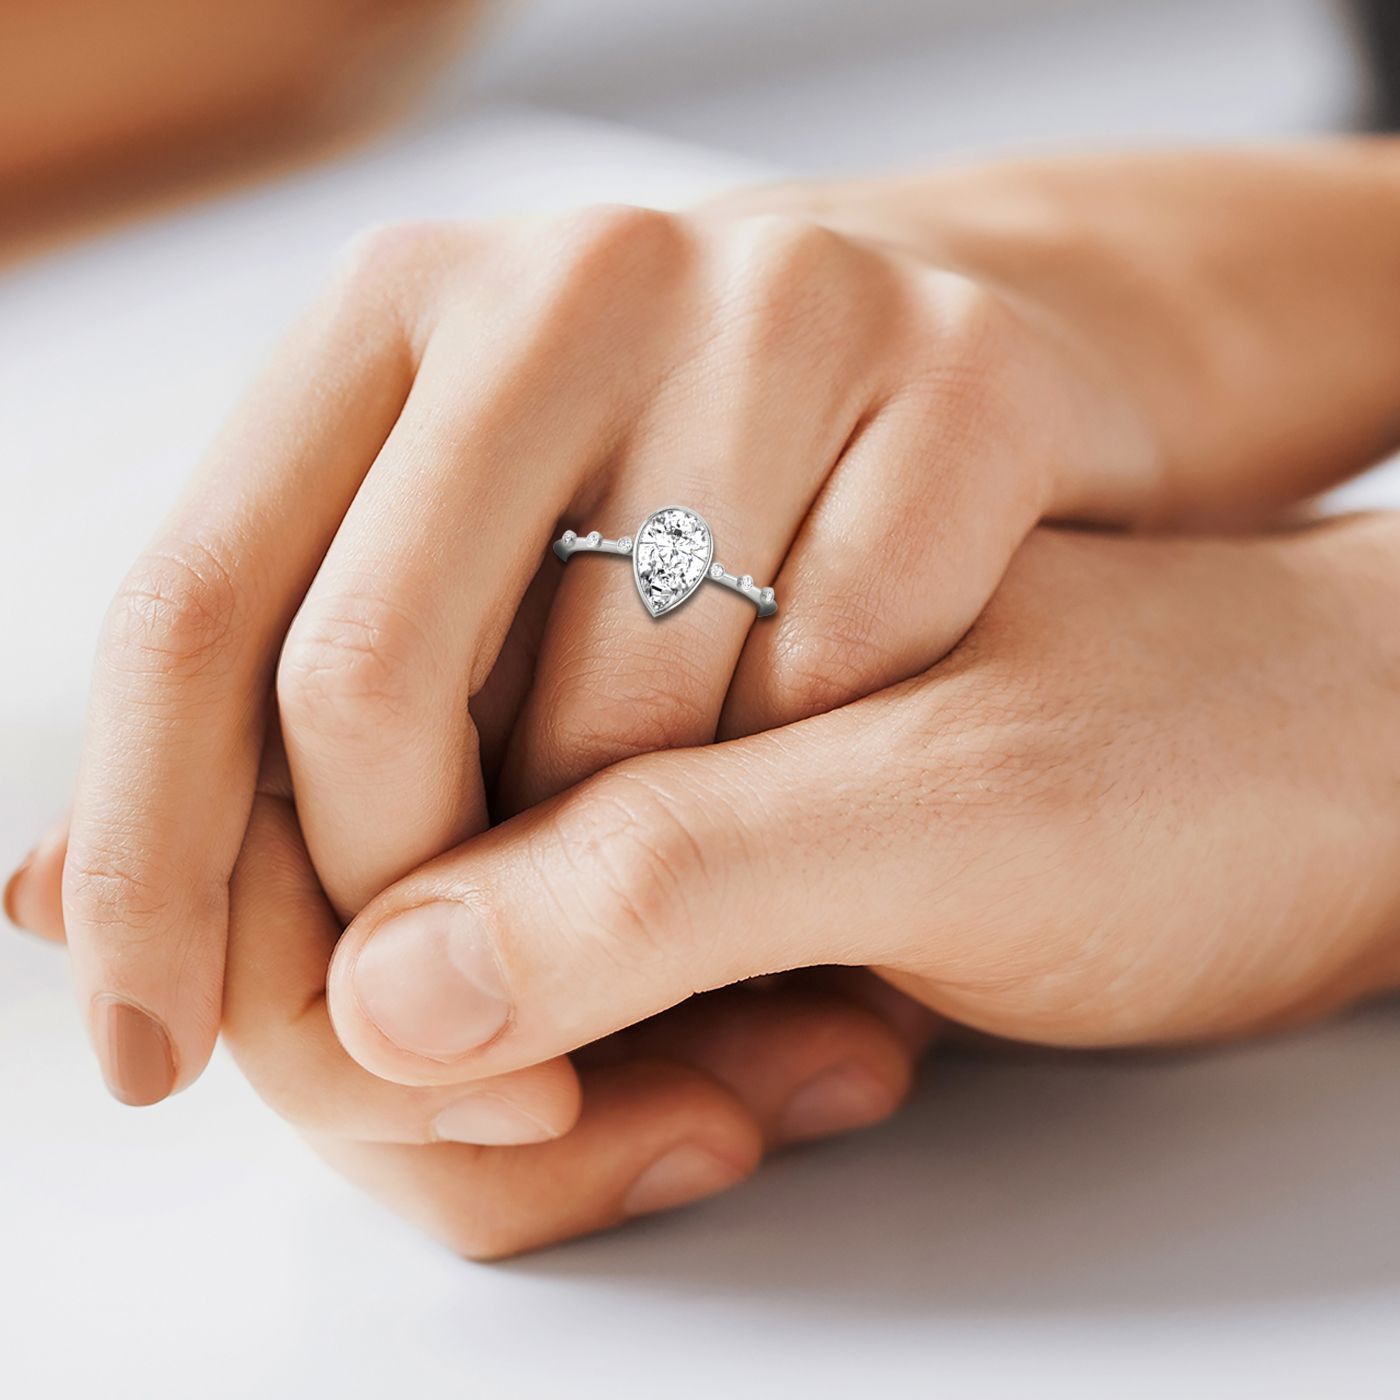 Plat Bezel Set Pear Engagement Ring With 6 Bezel Set Round Diamonds On Shank